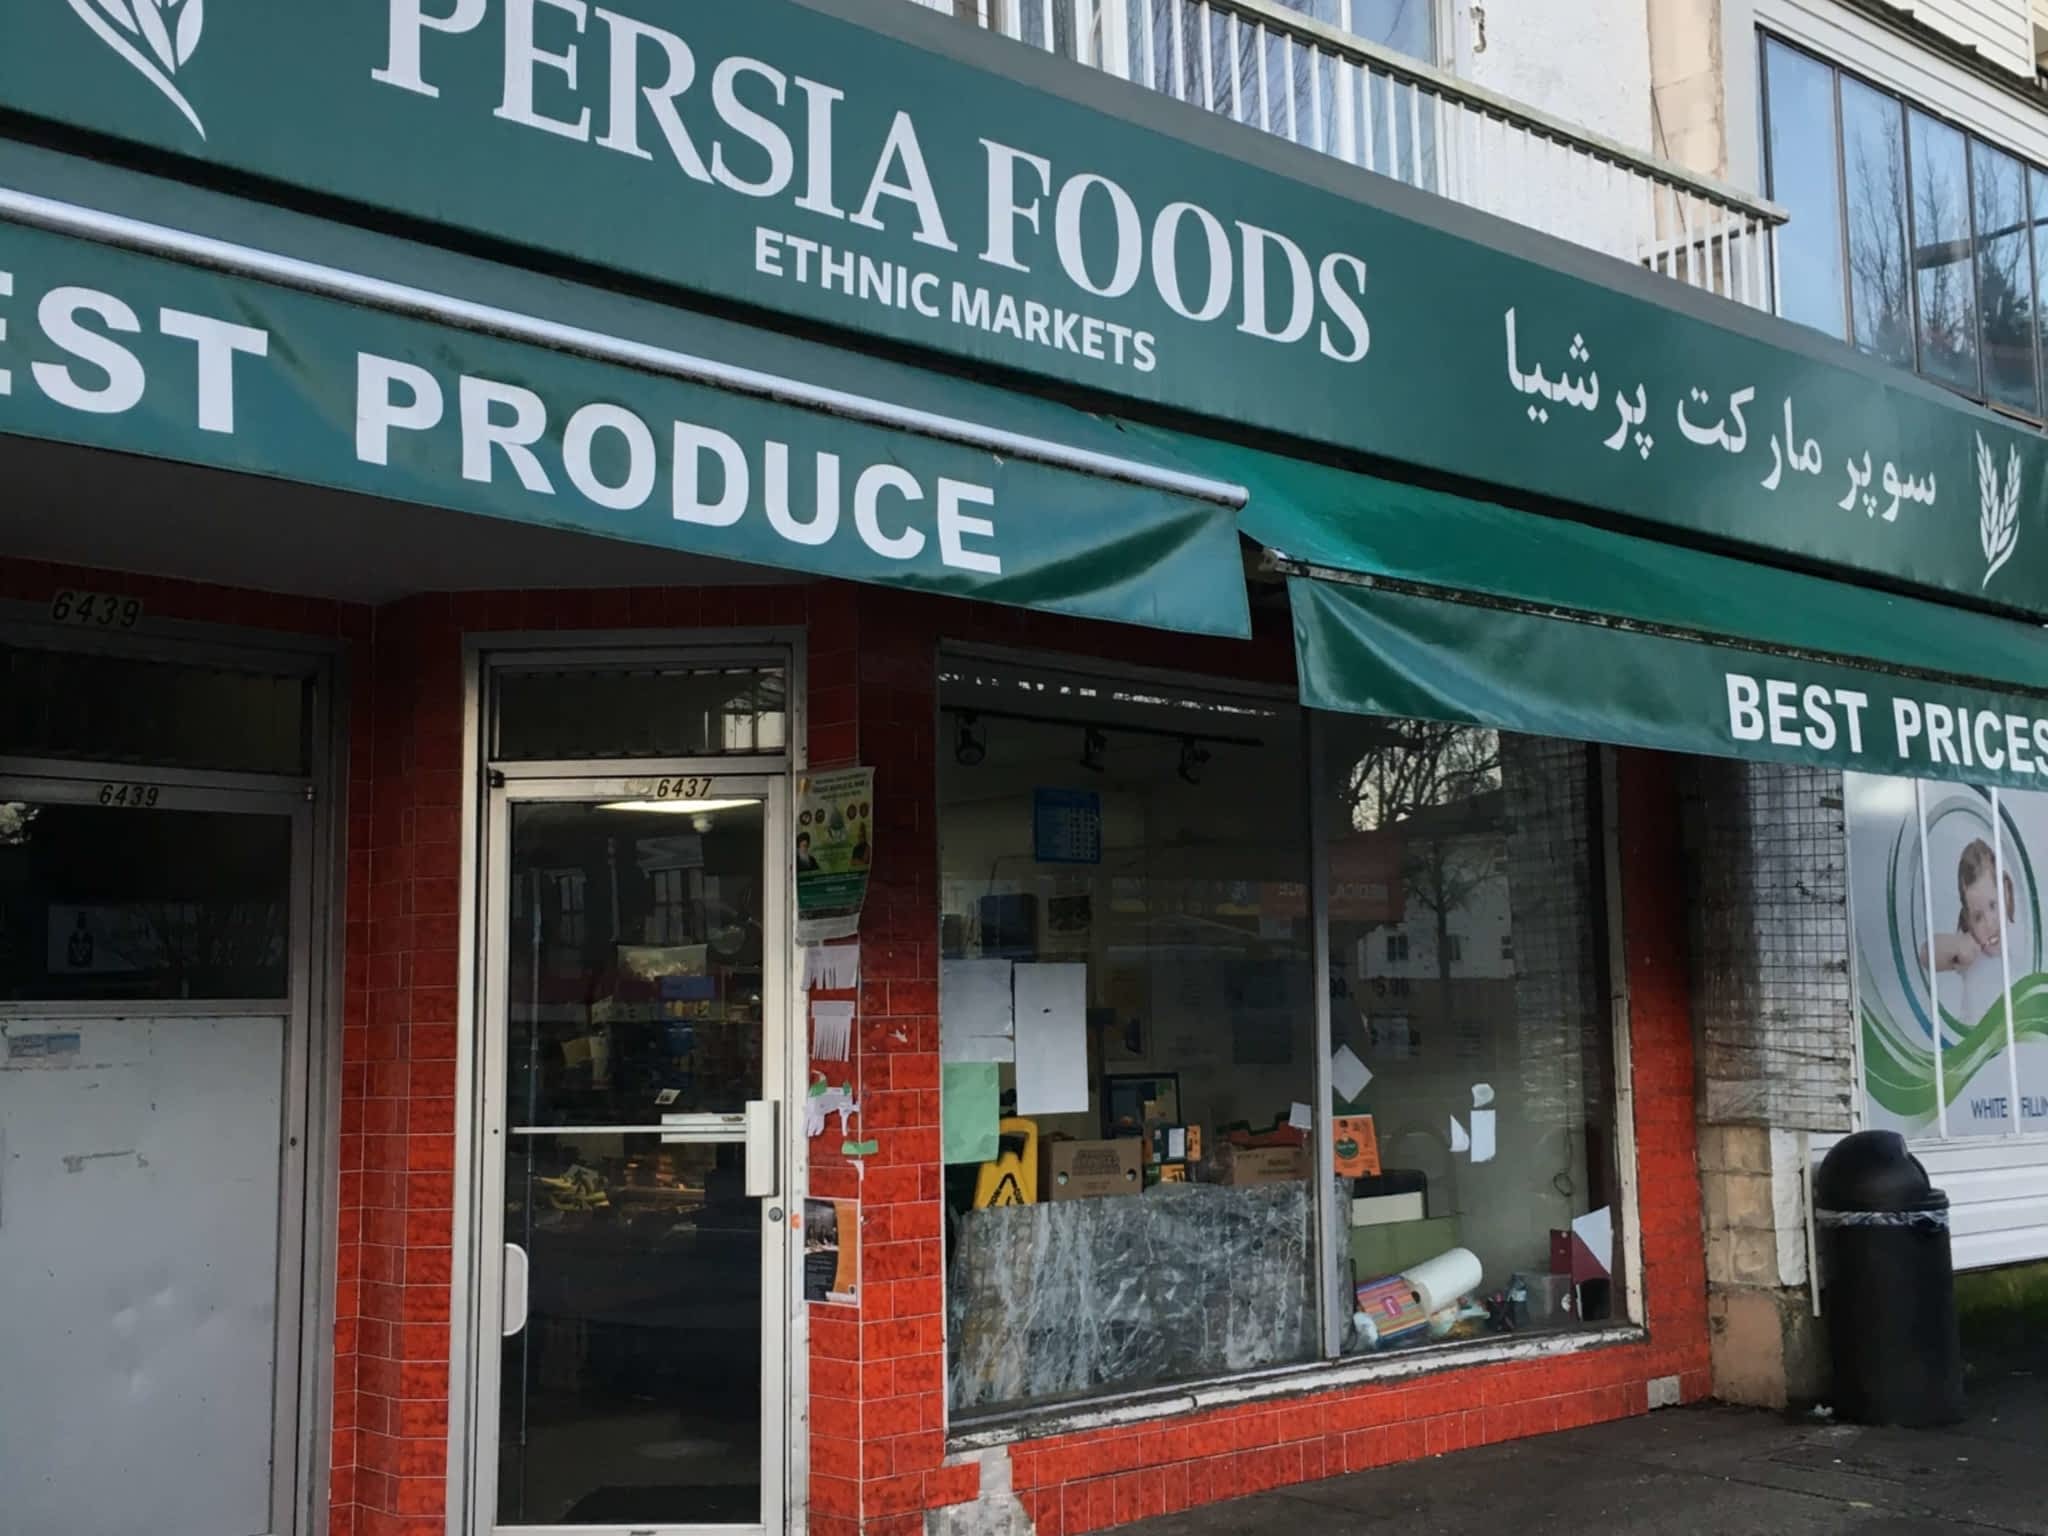 photo Persia Foods Ethnic Markets